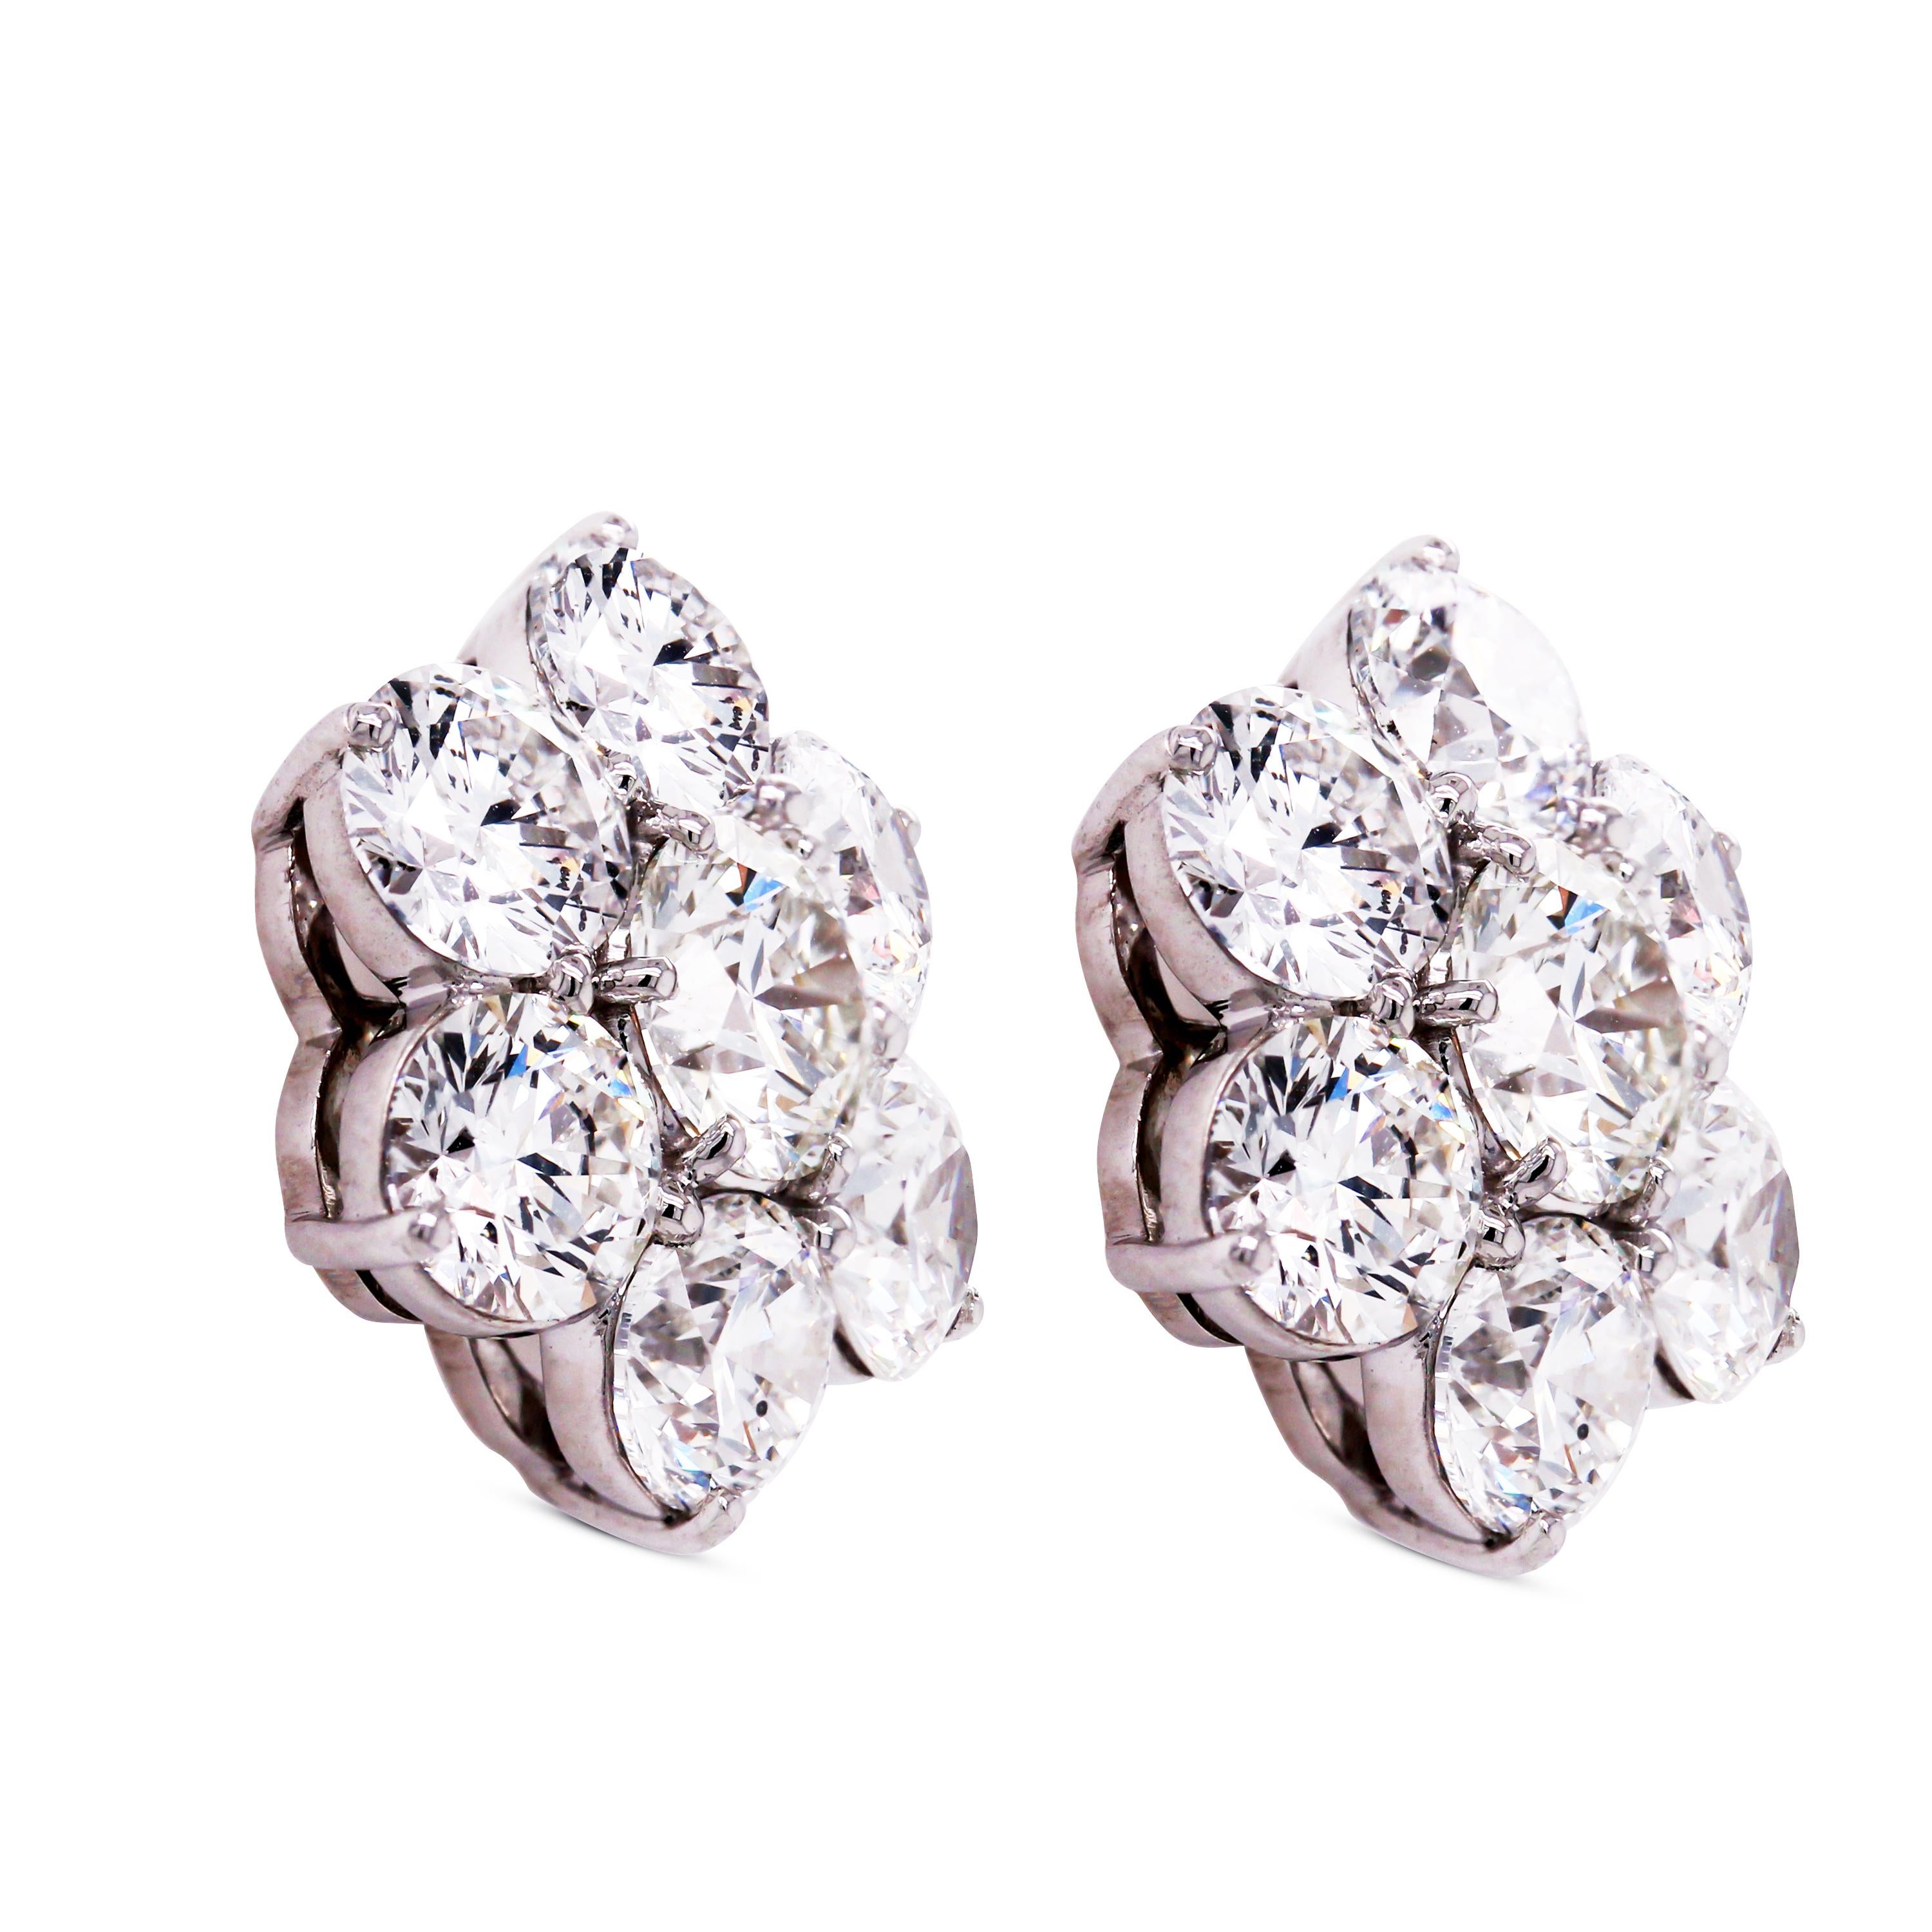 Round Cut Diamond Cluster Stud Earrings White Gold 7.84 Carat